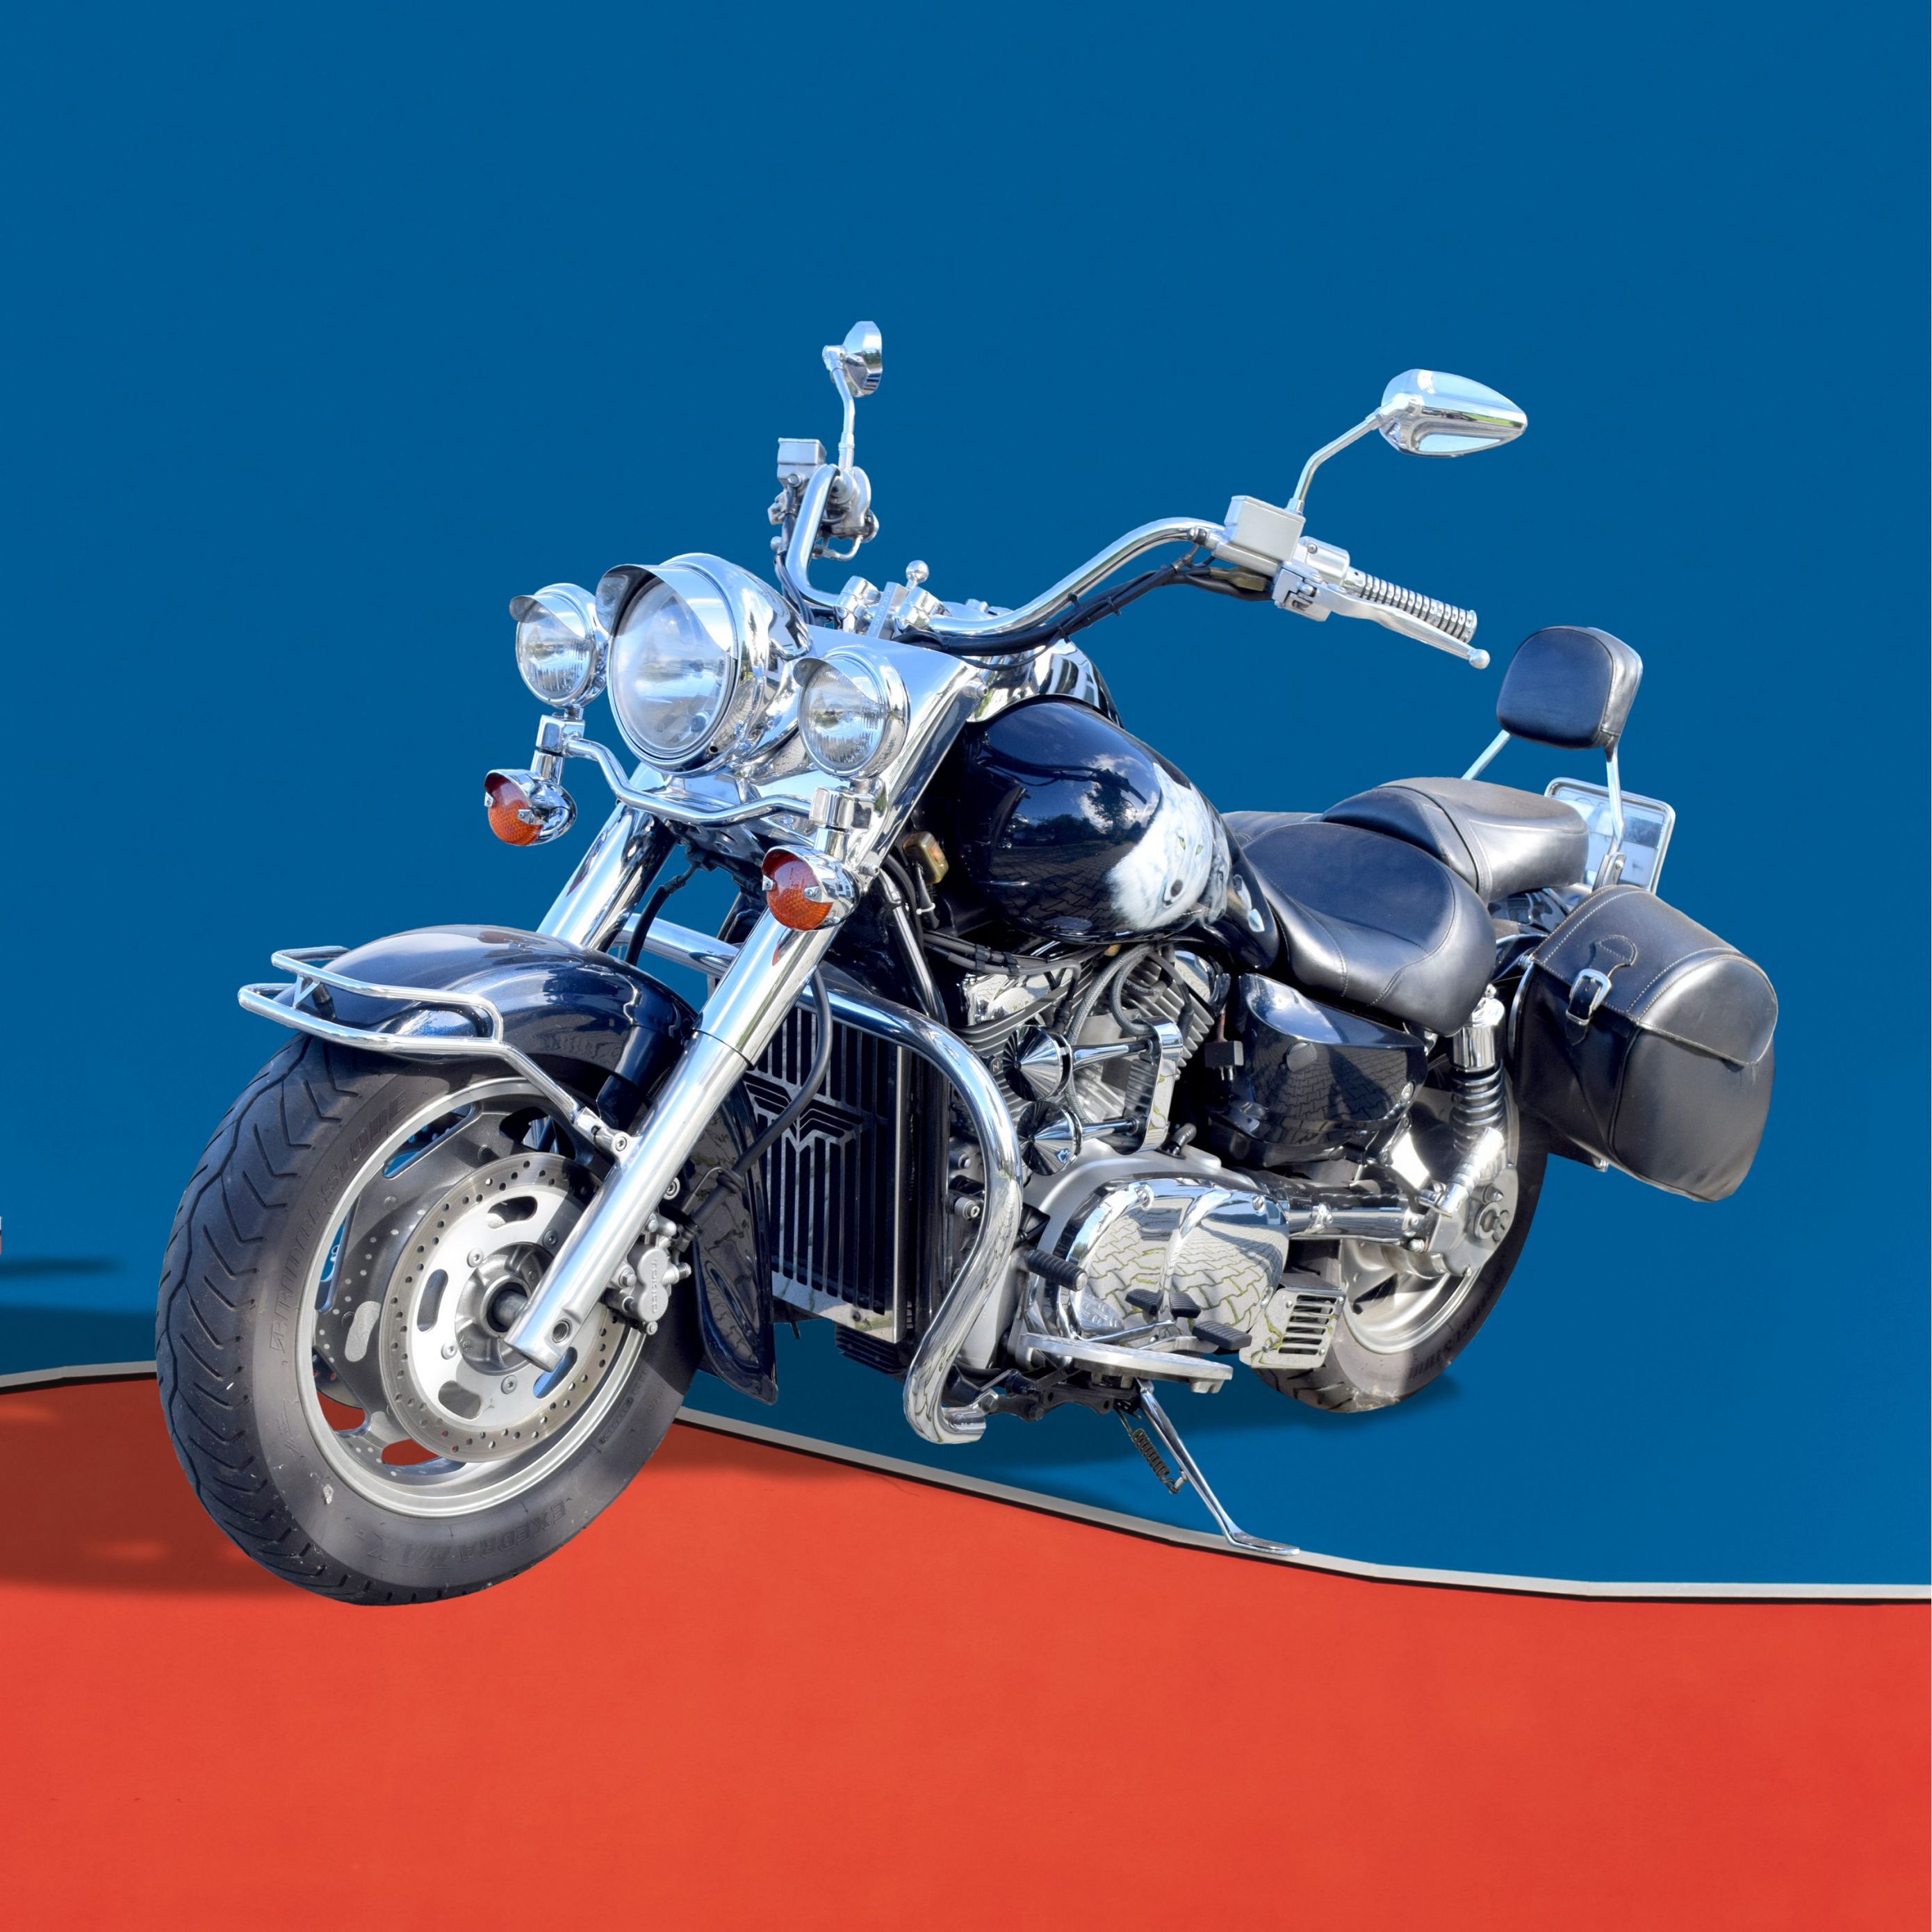 2780x2780 Parallax wallpaper 4k Motorbike Blue Dividing Red Ipad Wallpaper 2780x2780 pixels resolution